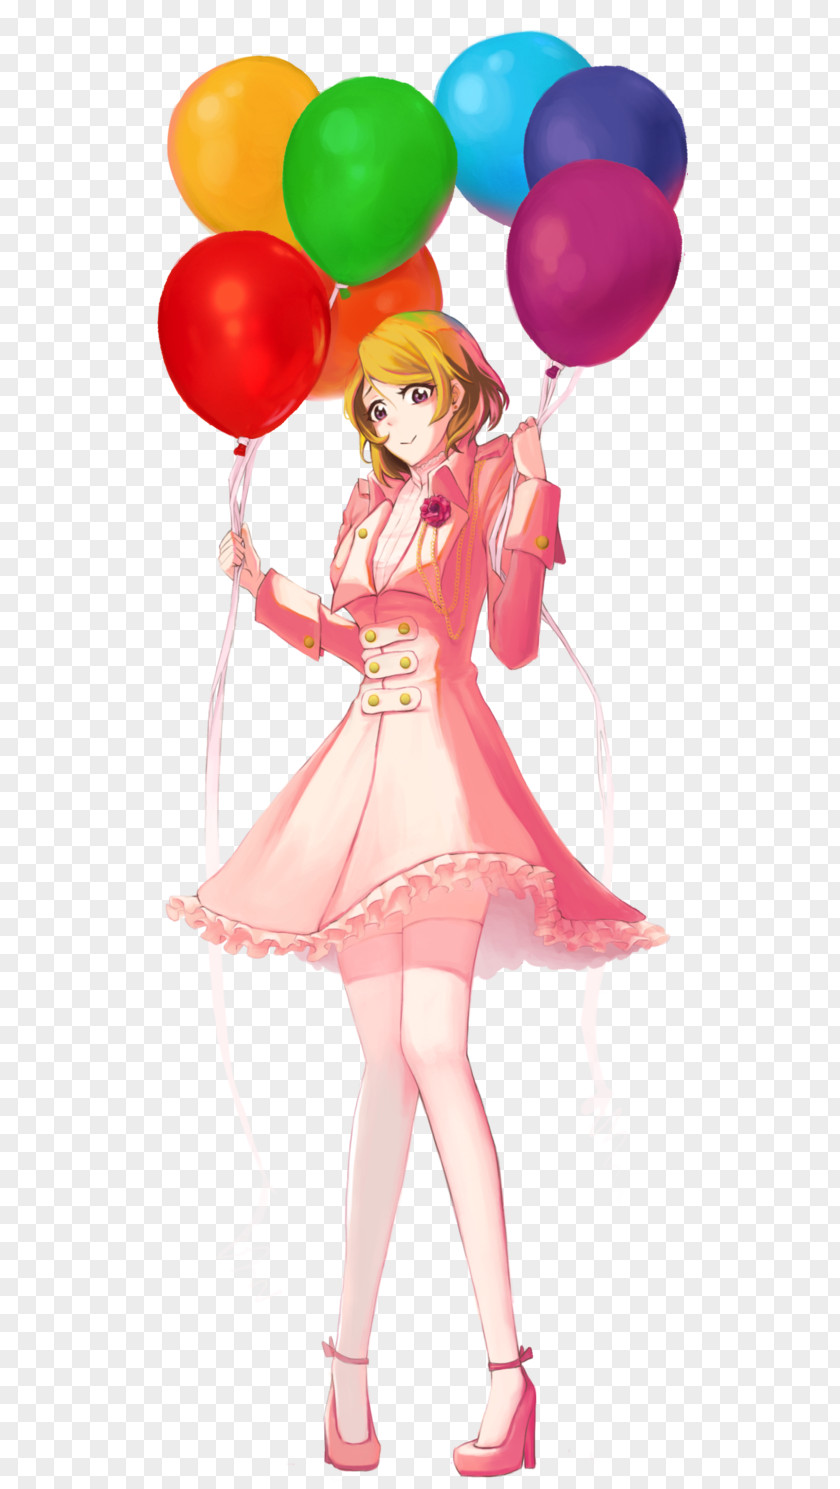 Hanayo Koizumi Balloon Cartoon Pink M Character PNG